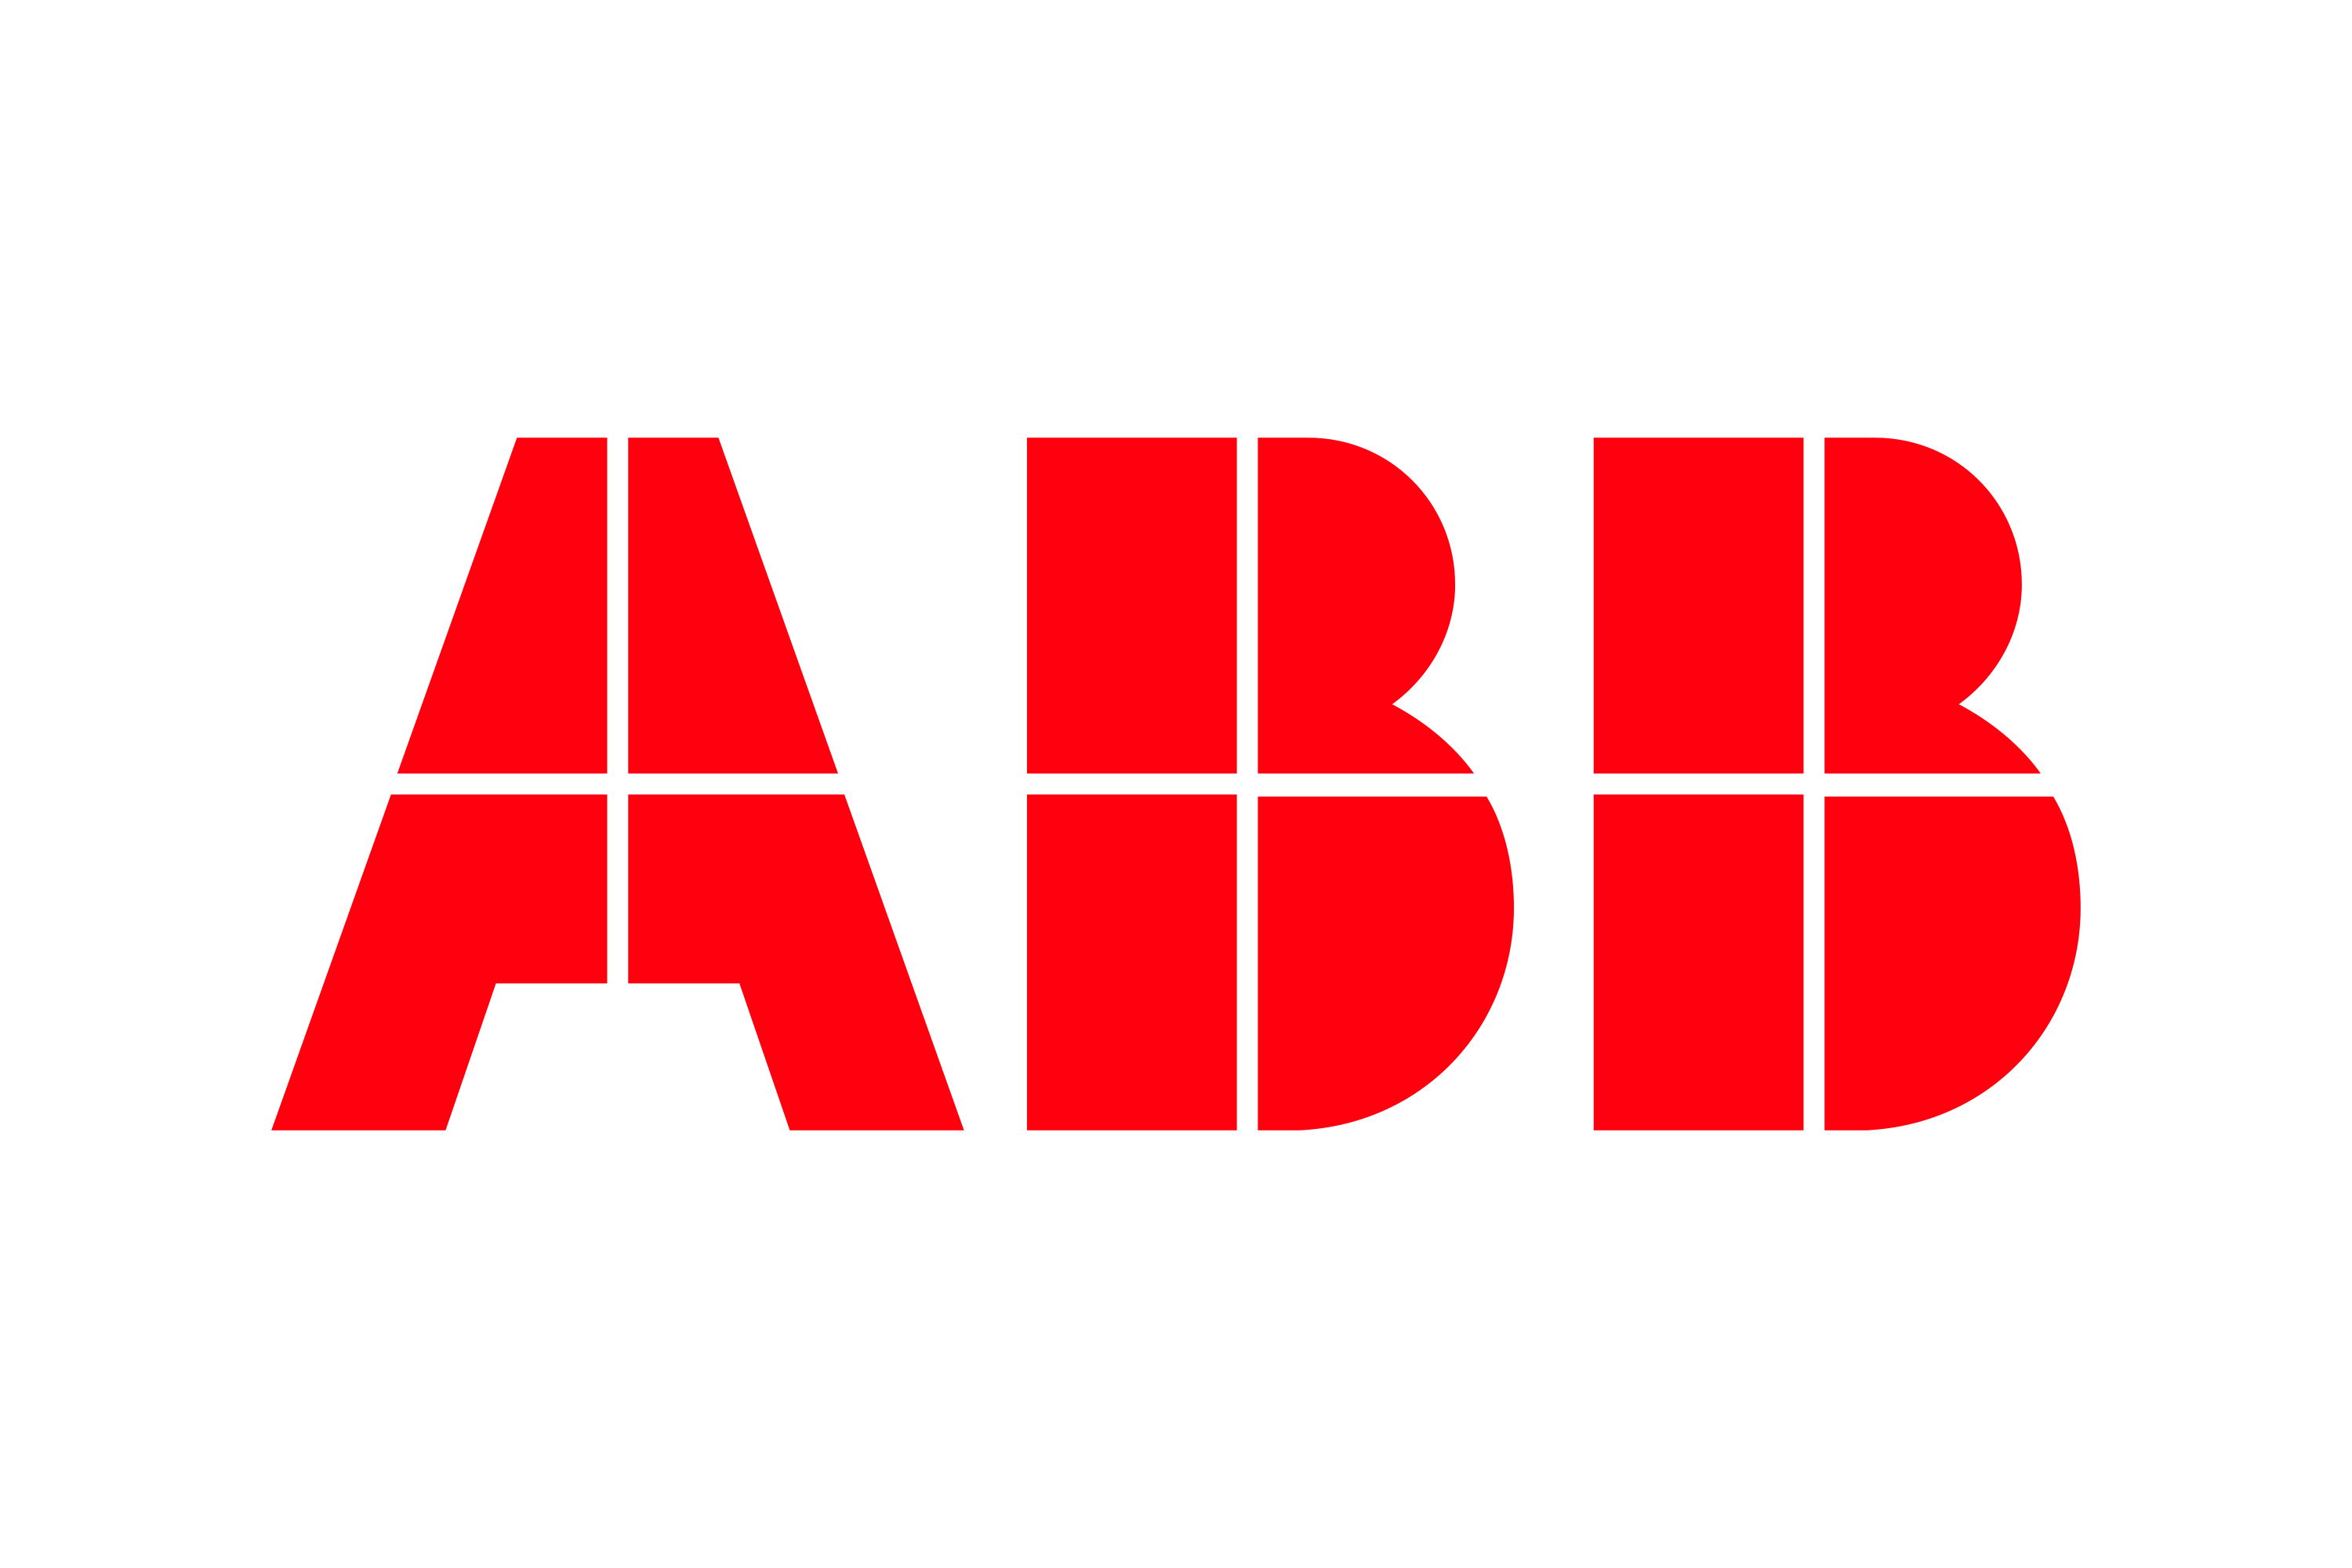 ABB Group Logo